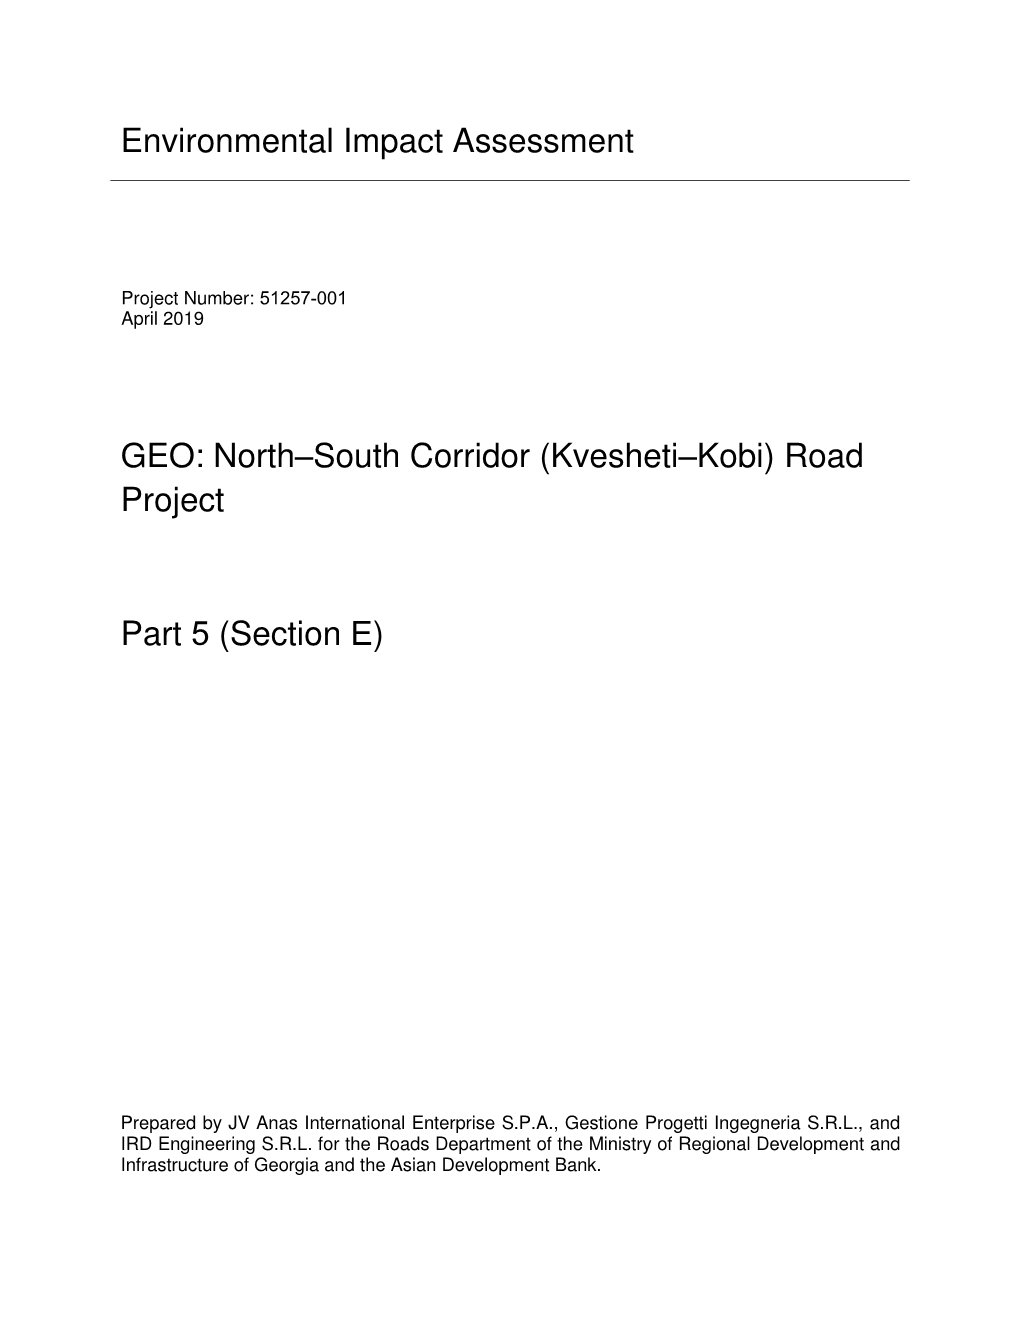 Environmental Impact Assessment GEO: North–South Corridor